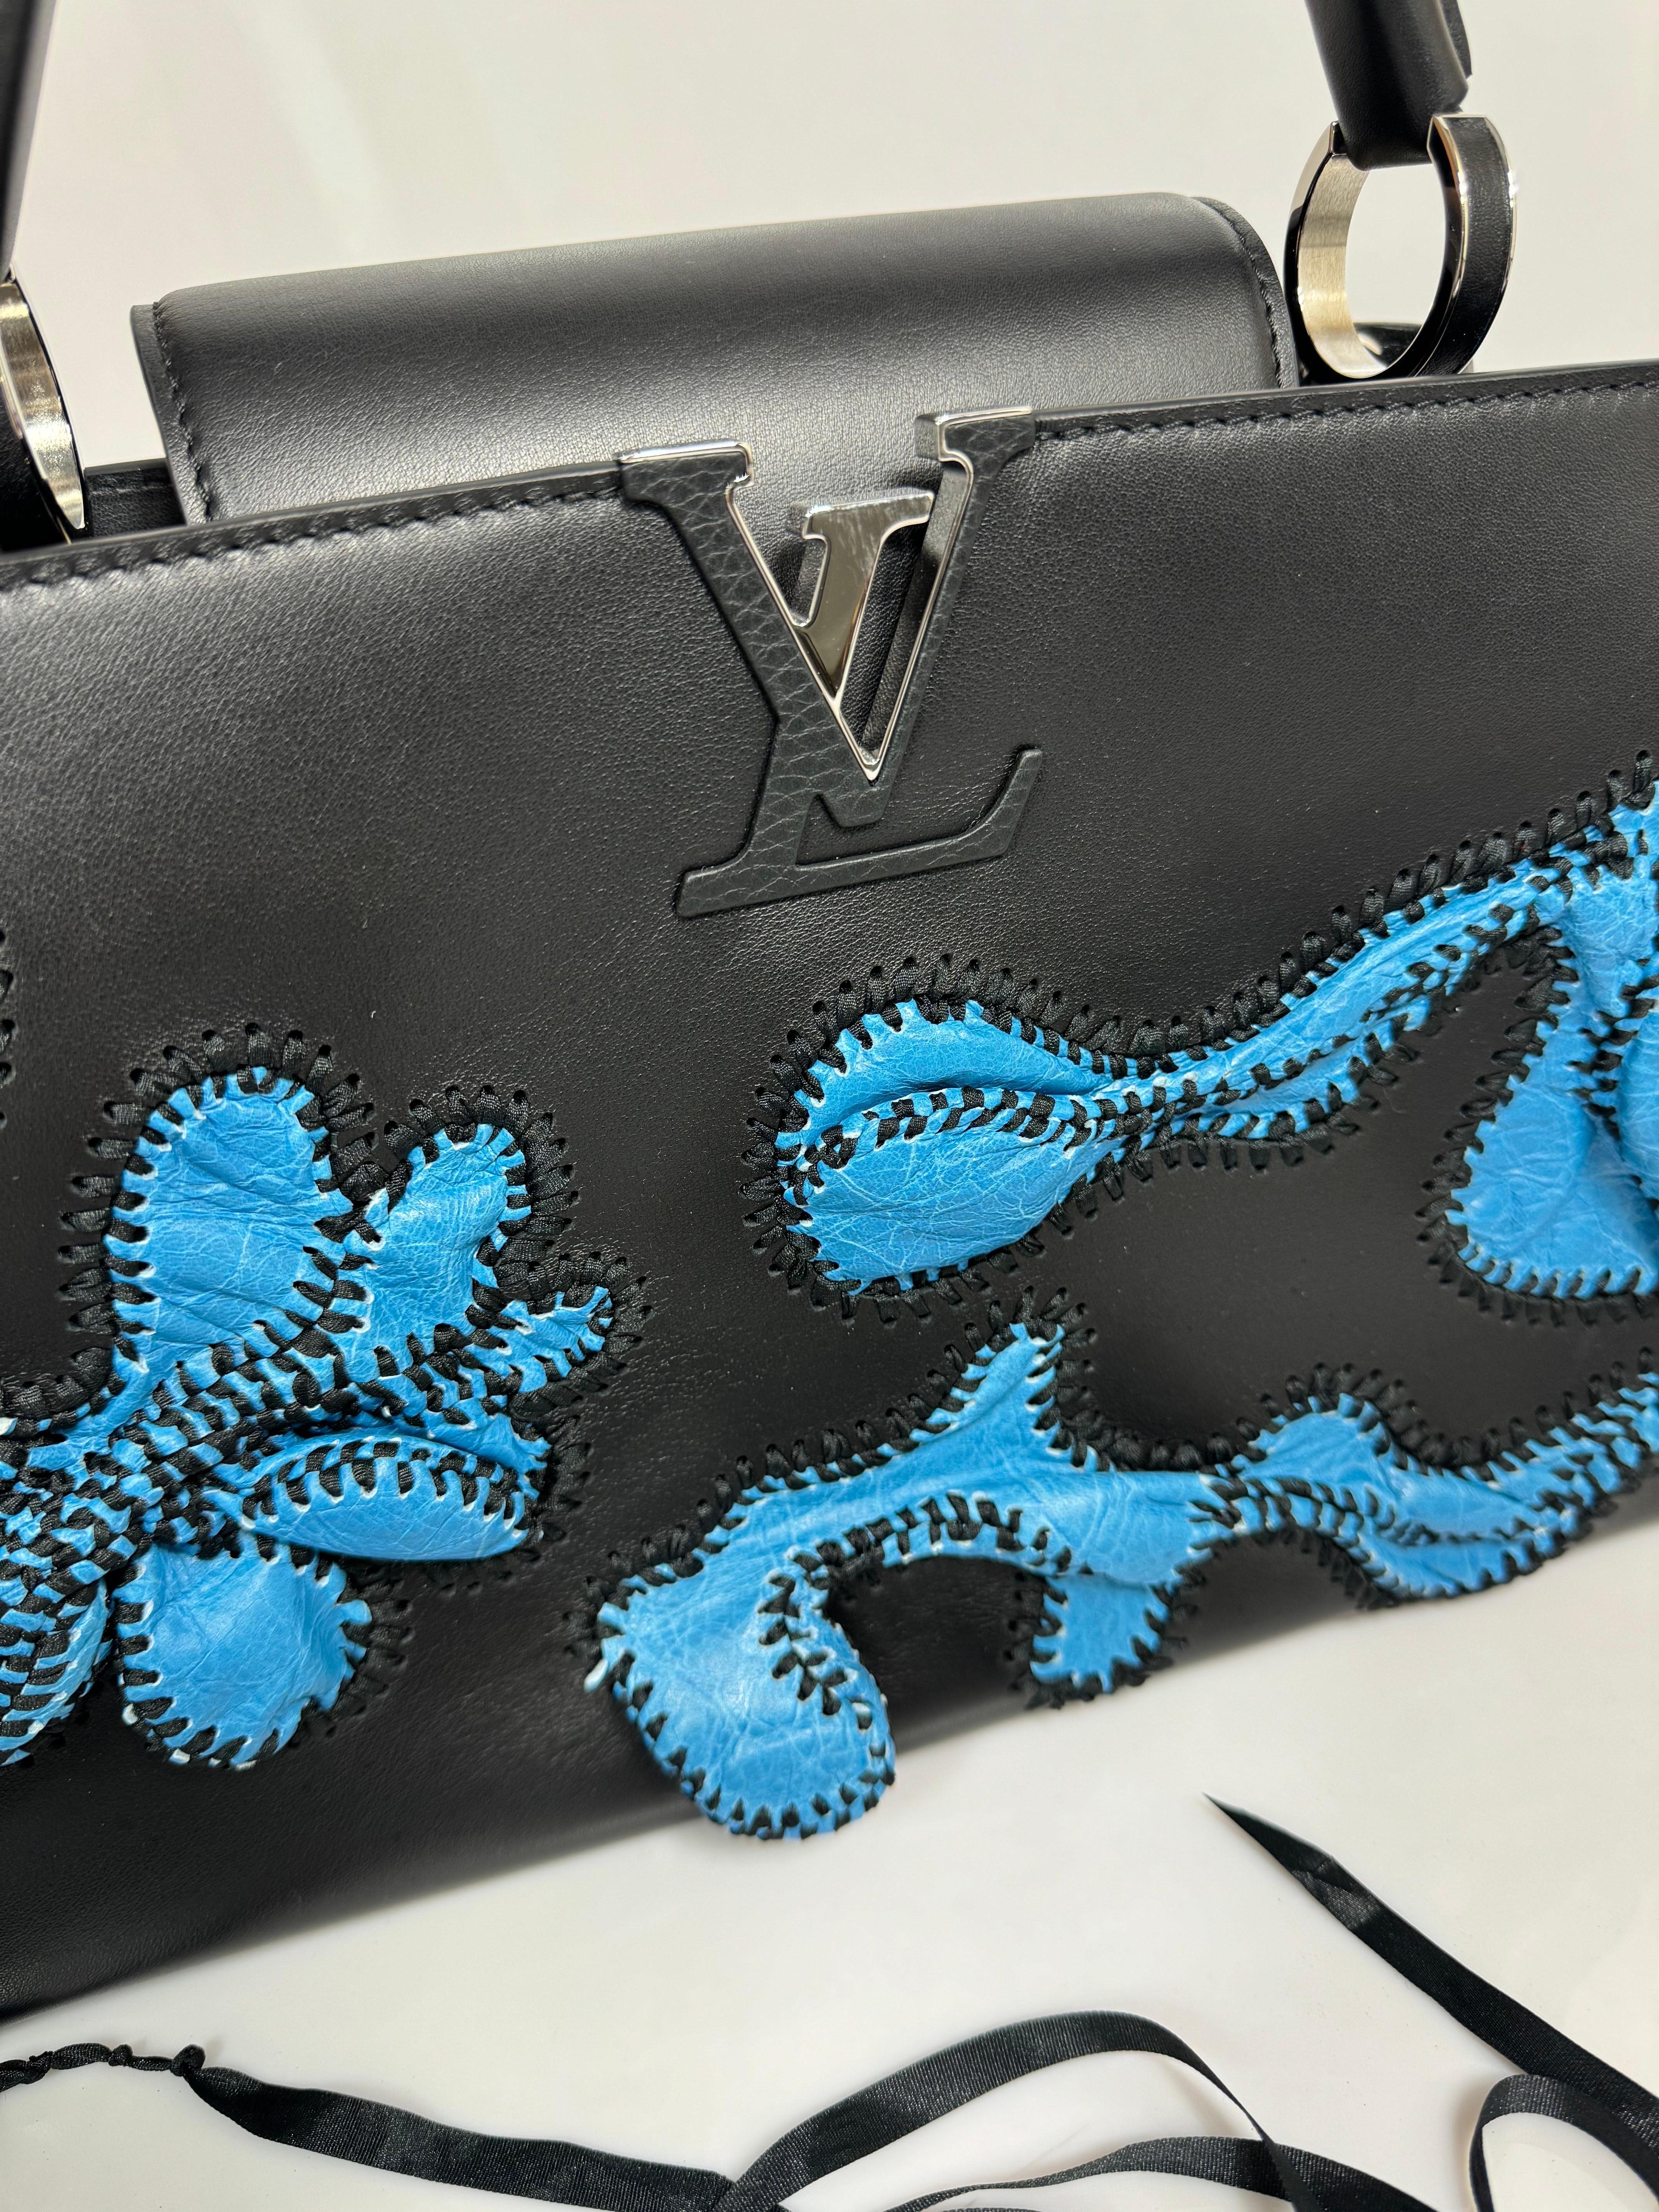 Louis Vuitton Limited Edition Nicholas Hlobo's Artycapucines Handbag-NEW IN BOX For Sale 1